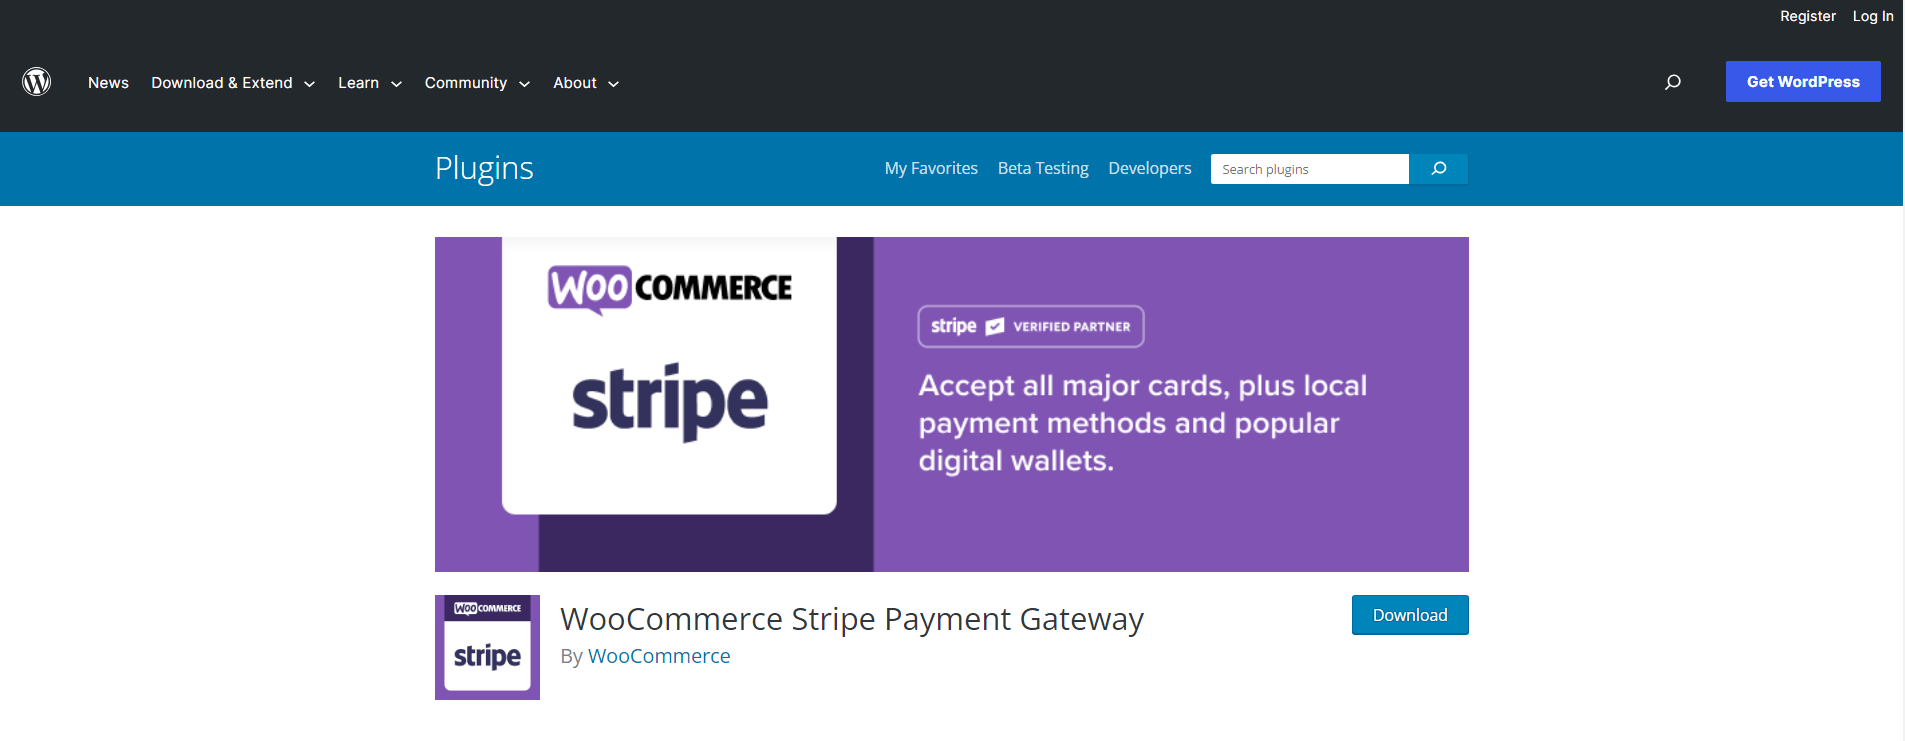 woocommerce_stripe_payment_gateway